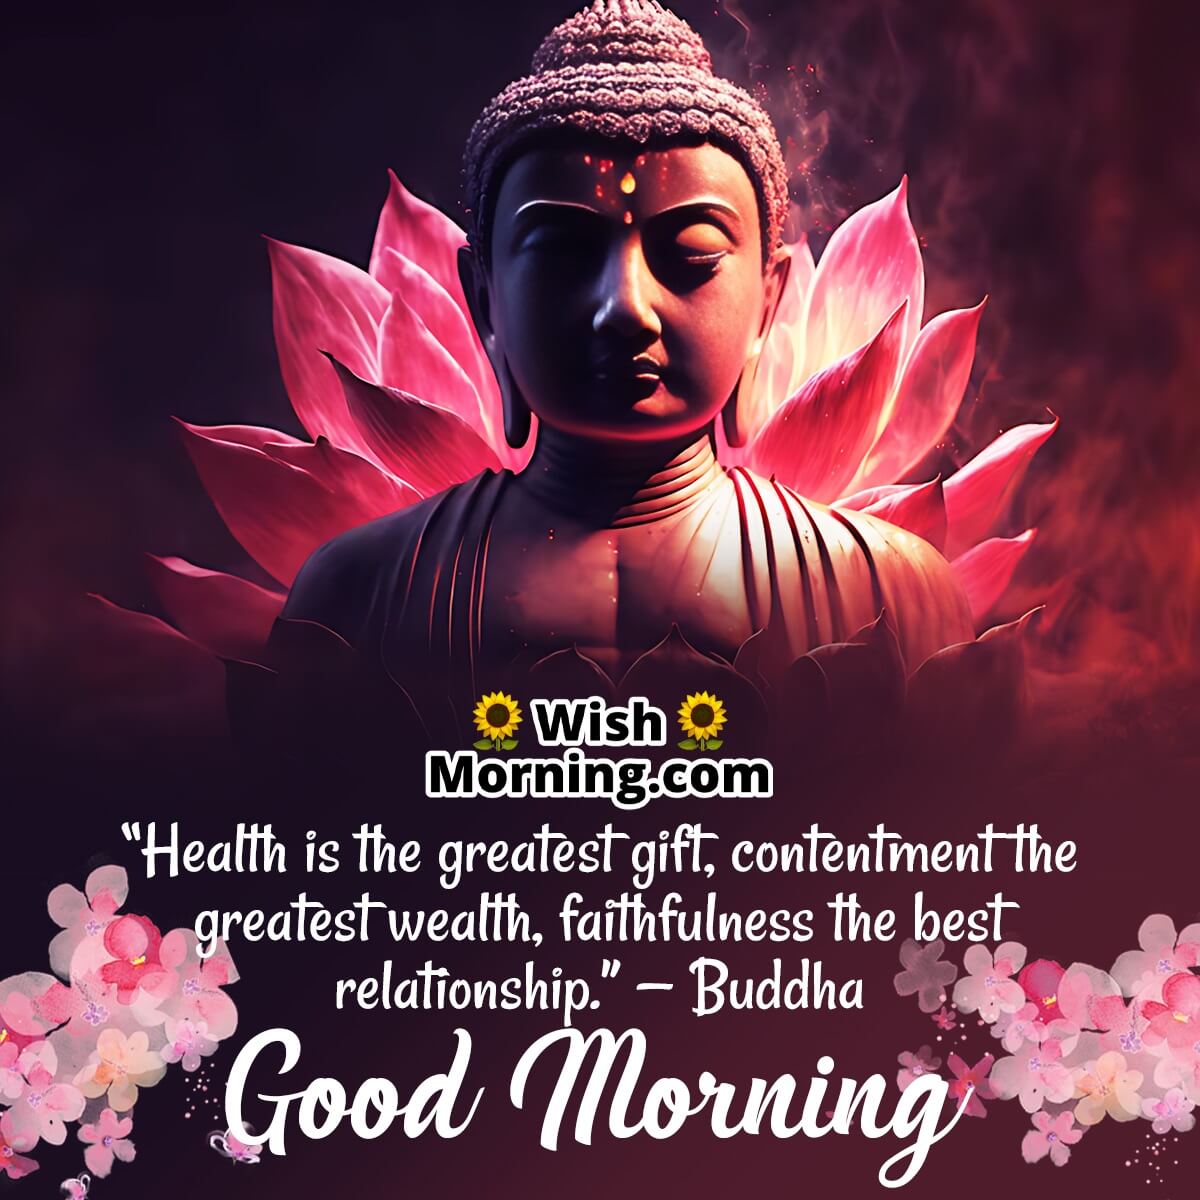 Good Morning Buddha Quotes Image